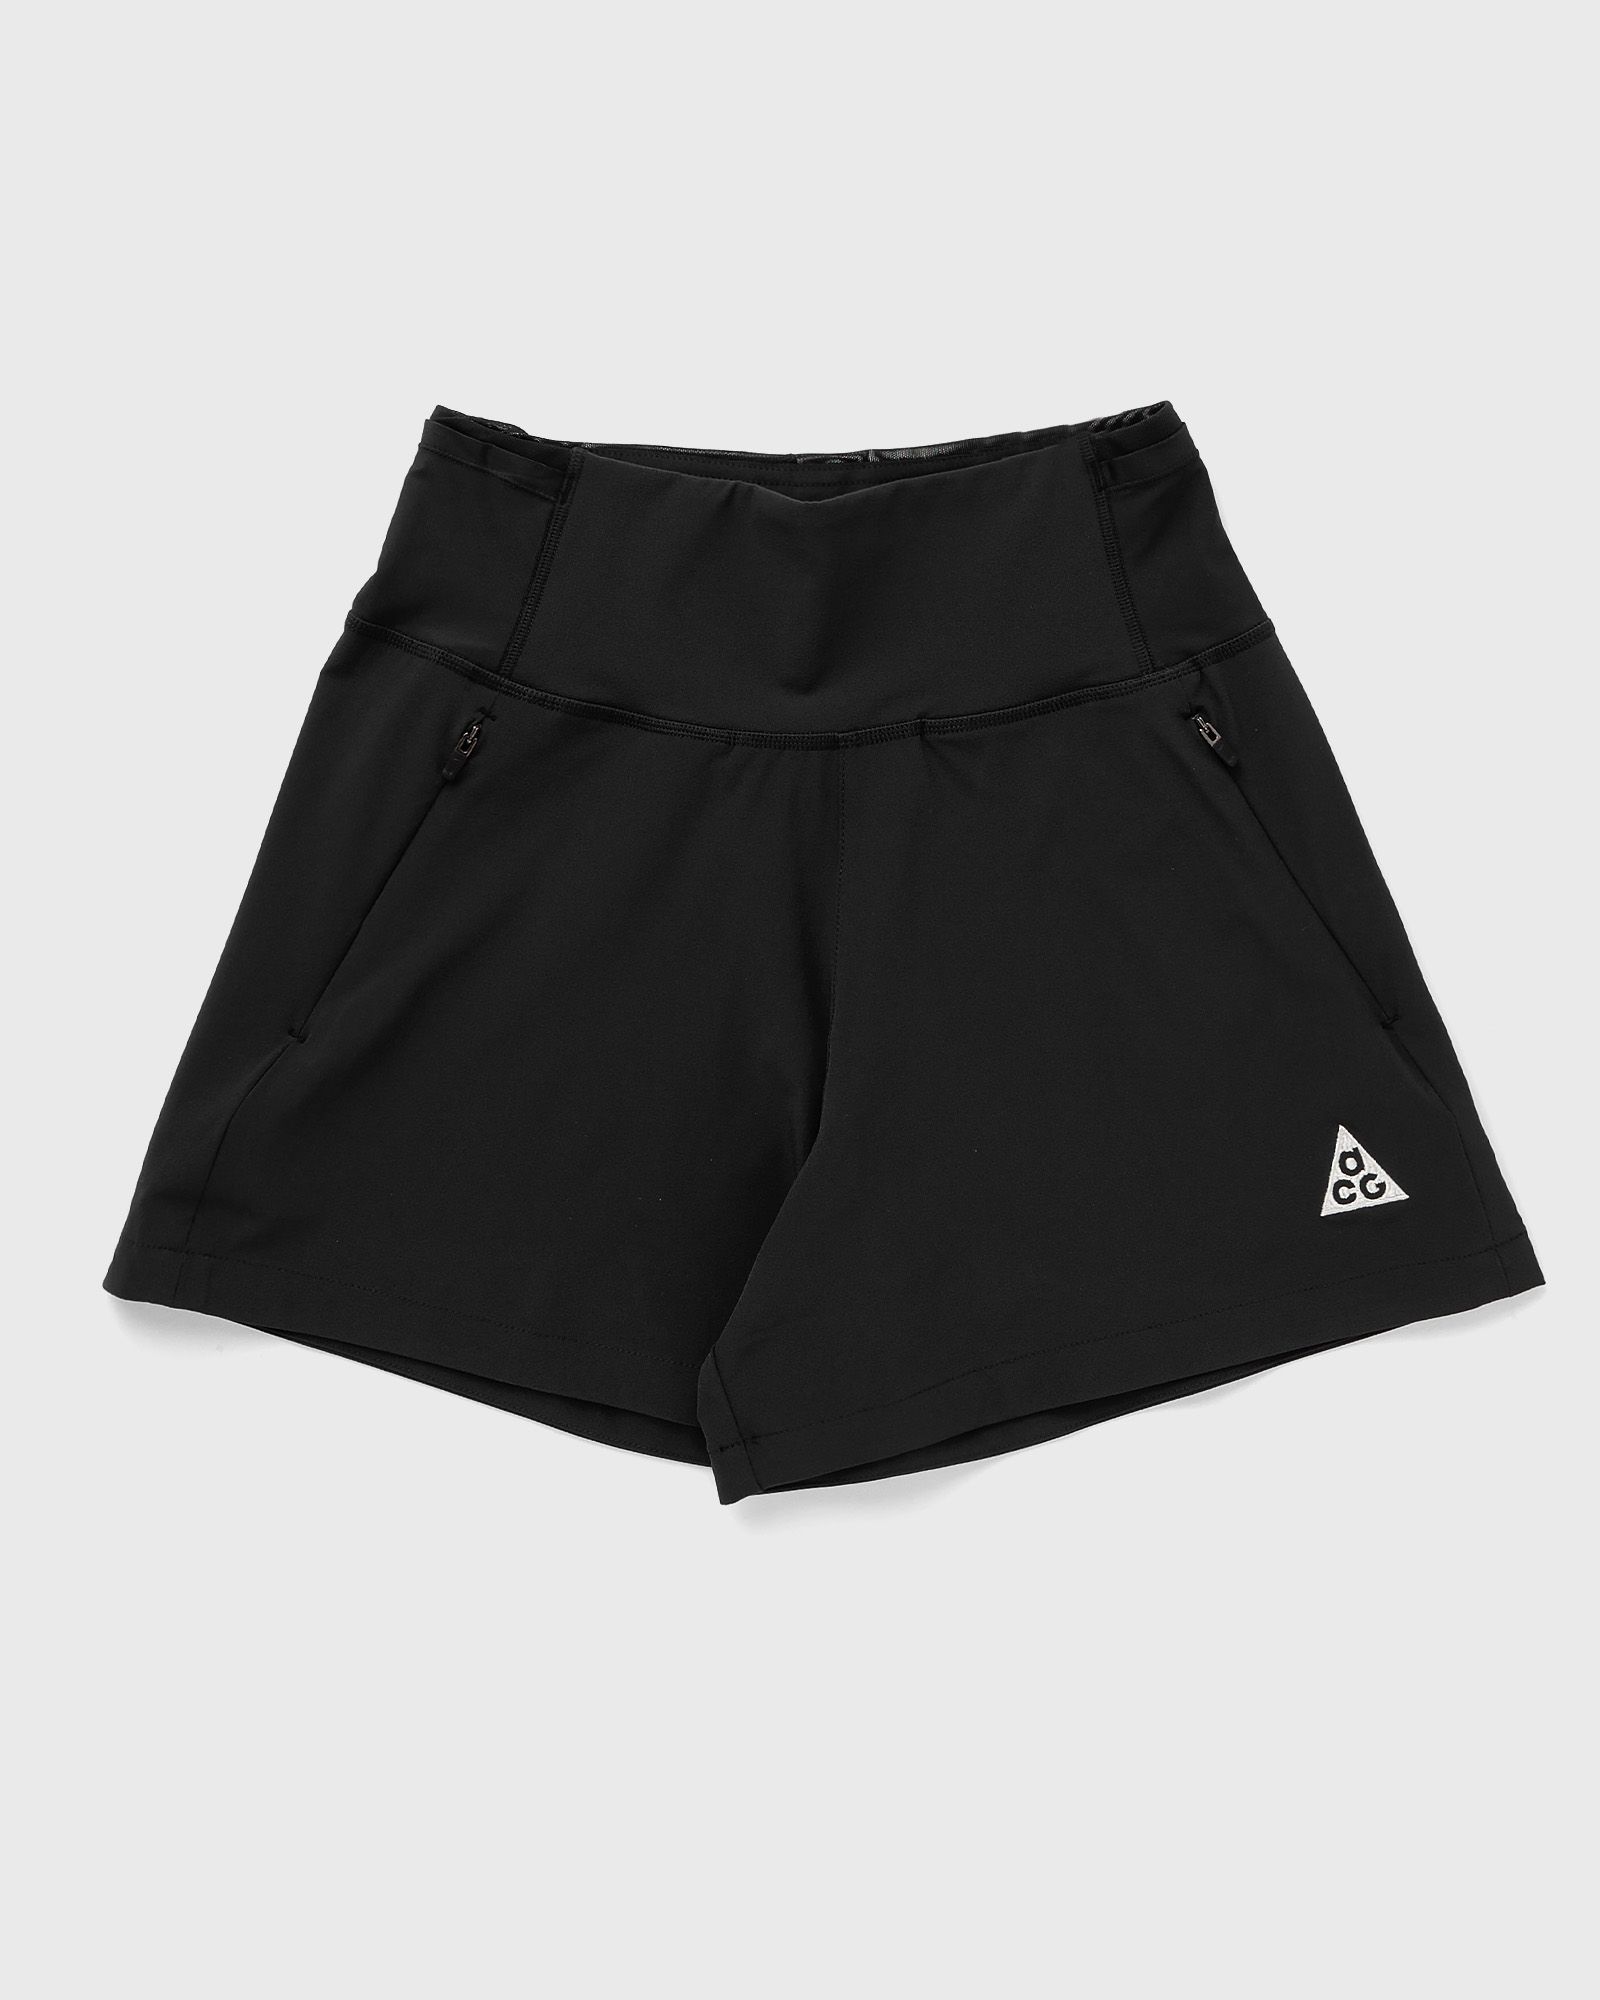 Nike - w acg df new sands short women sport & team shorts black in größe:xs